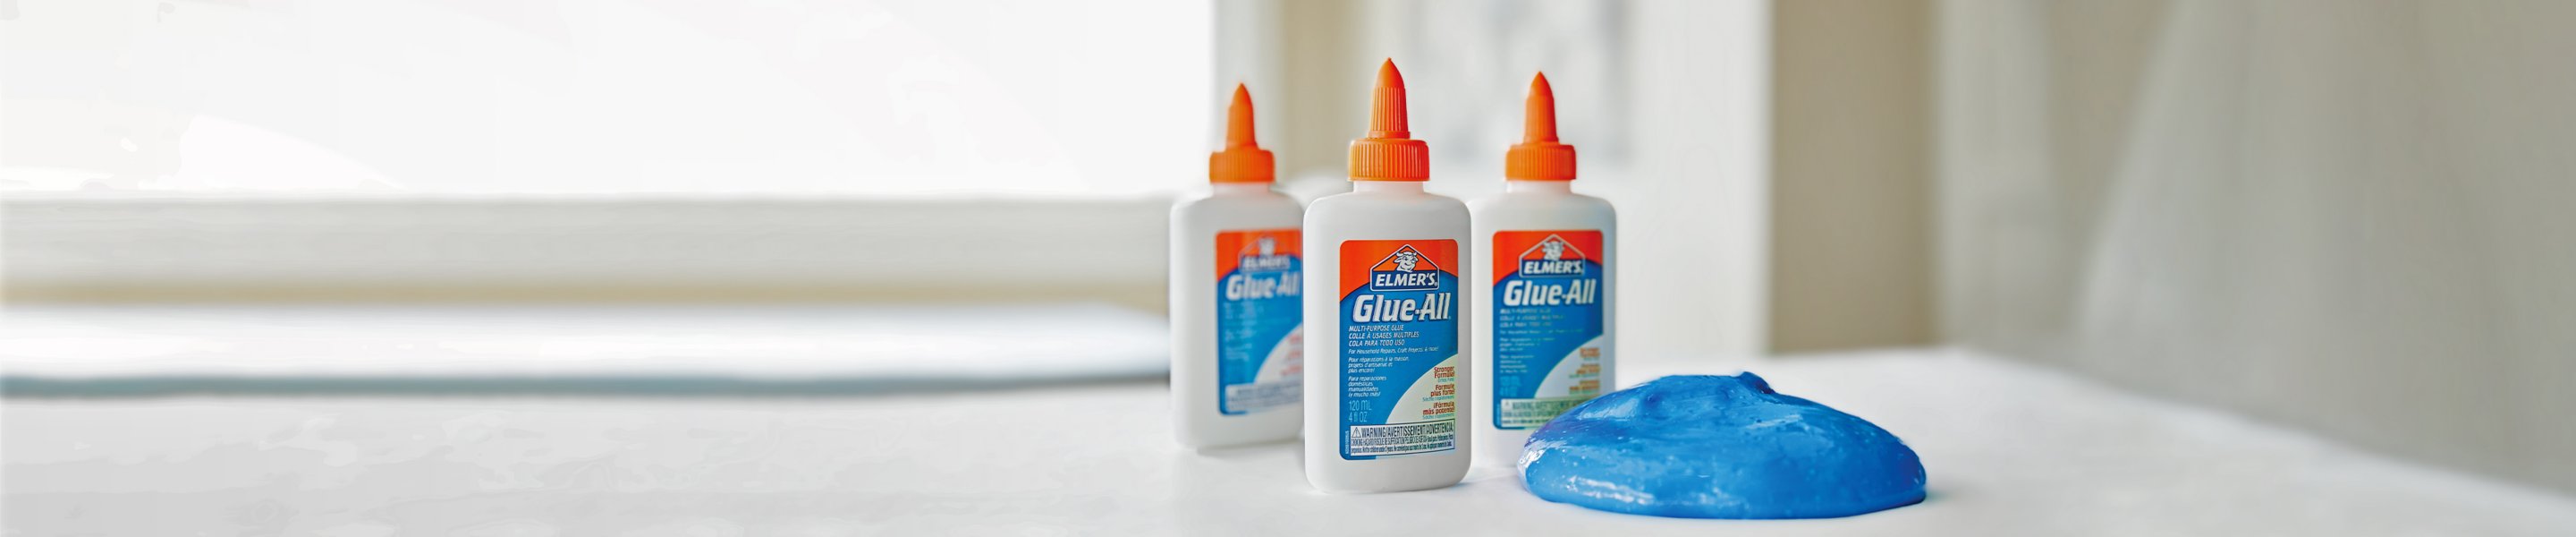 slim banner liquid glue products